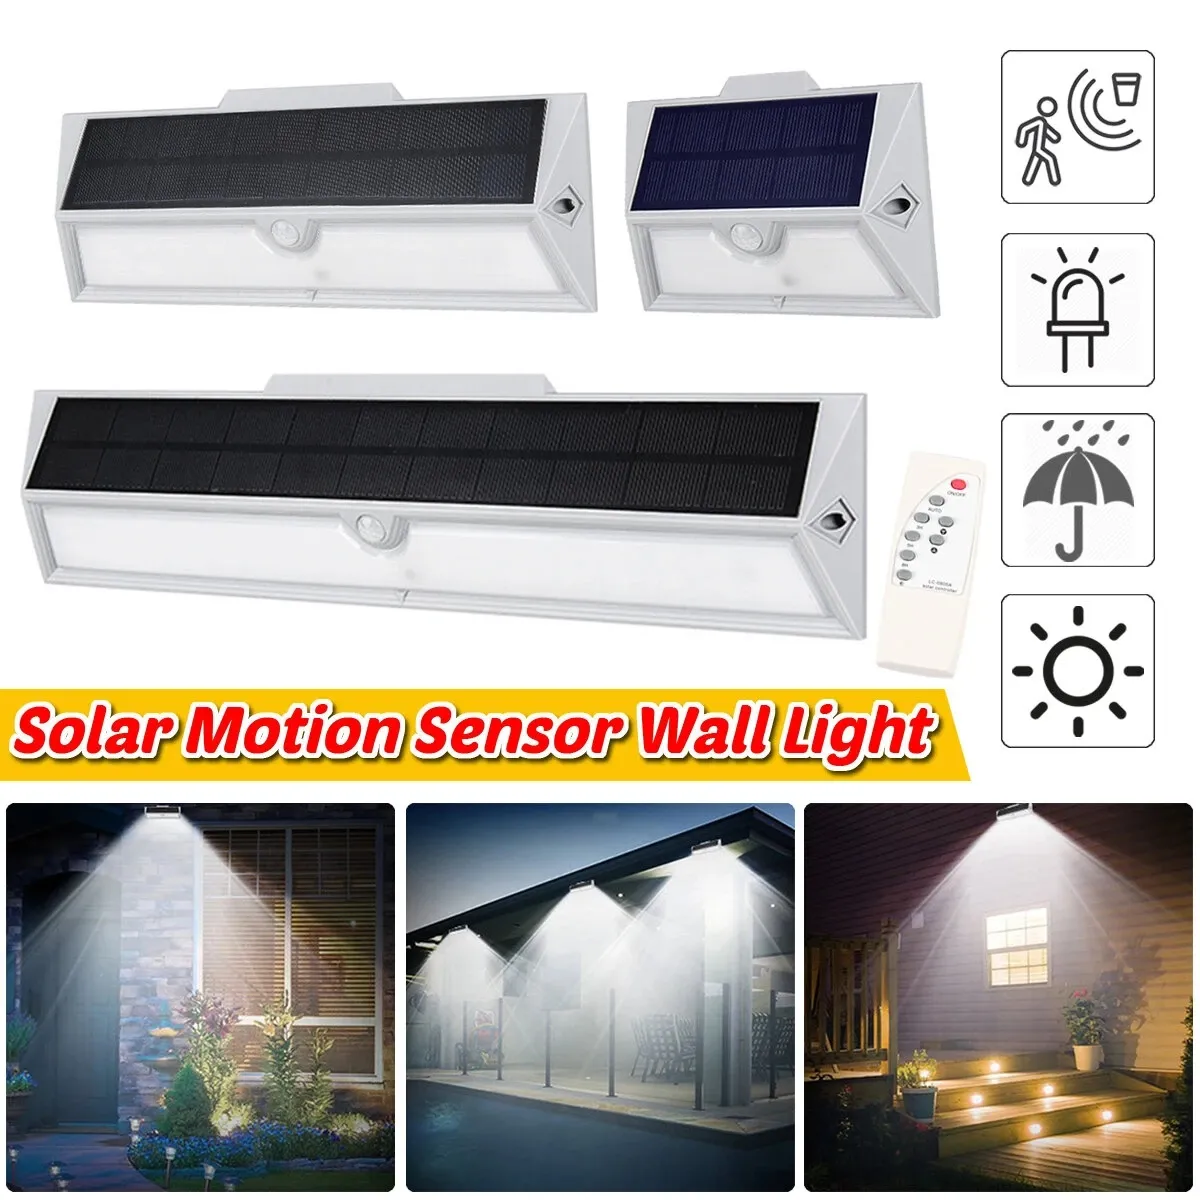 Waterproof PIR Motion Sensor 9/21/33LED Solar Power Wall Light Outdoor Garden Yard Home Lamp - Small